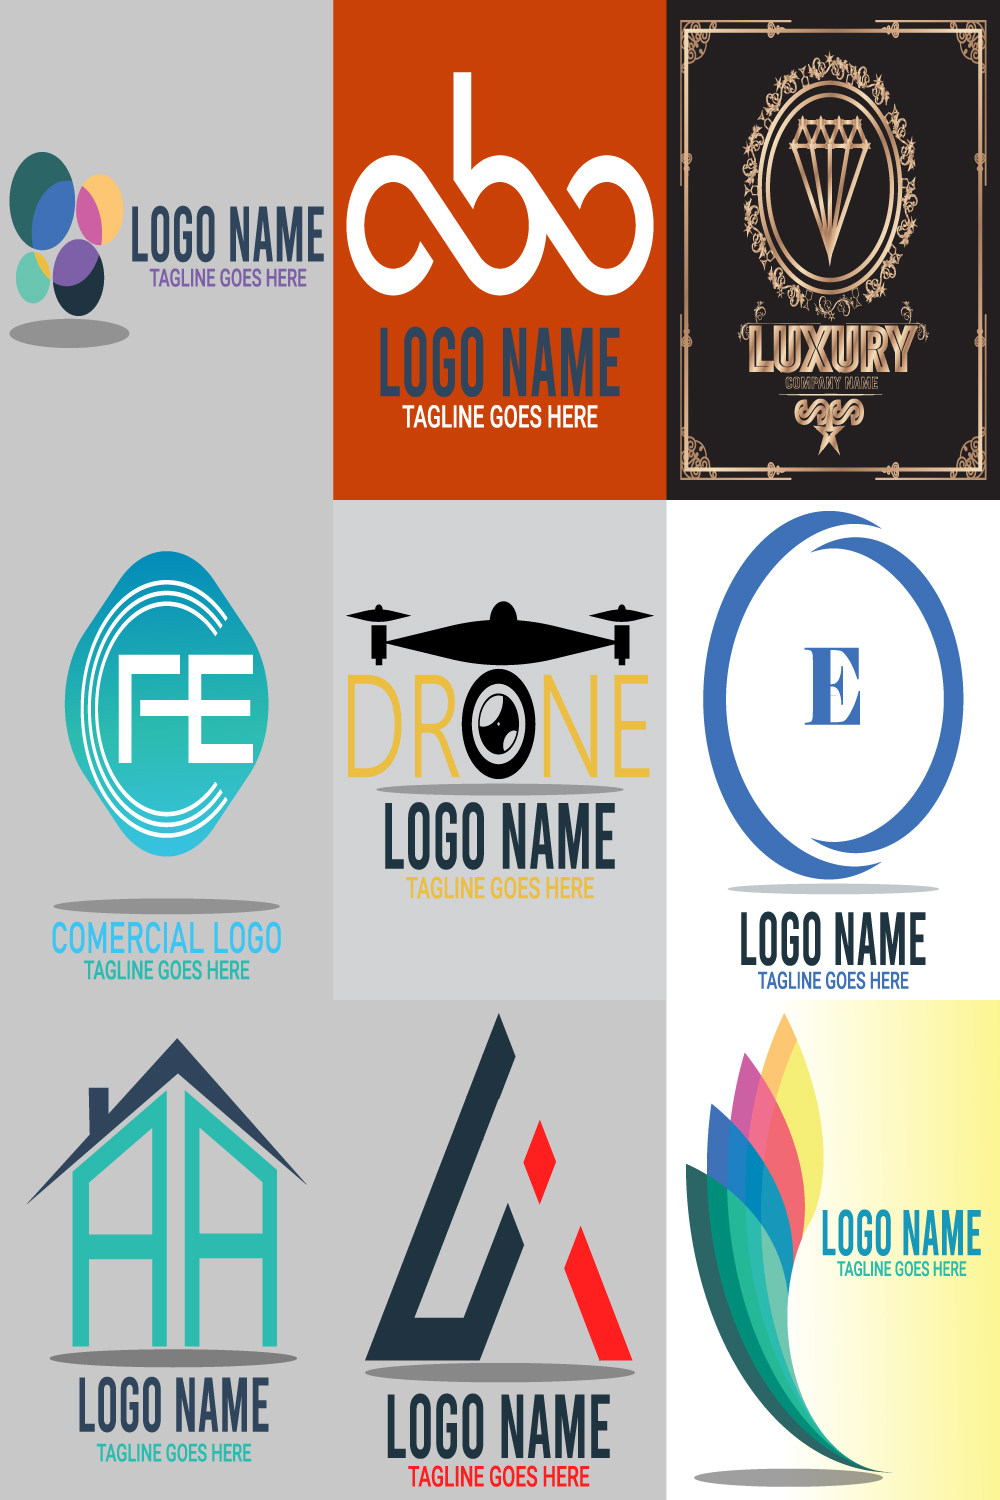 Branding identity and corporate minimalist logo design pinterest preview image.